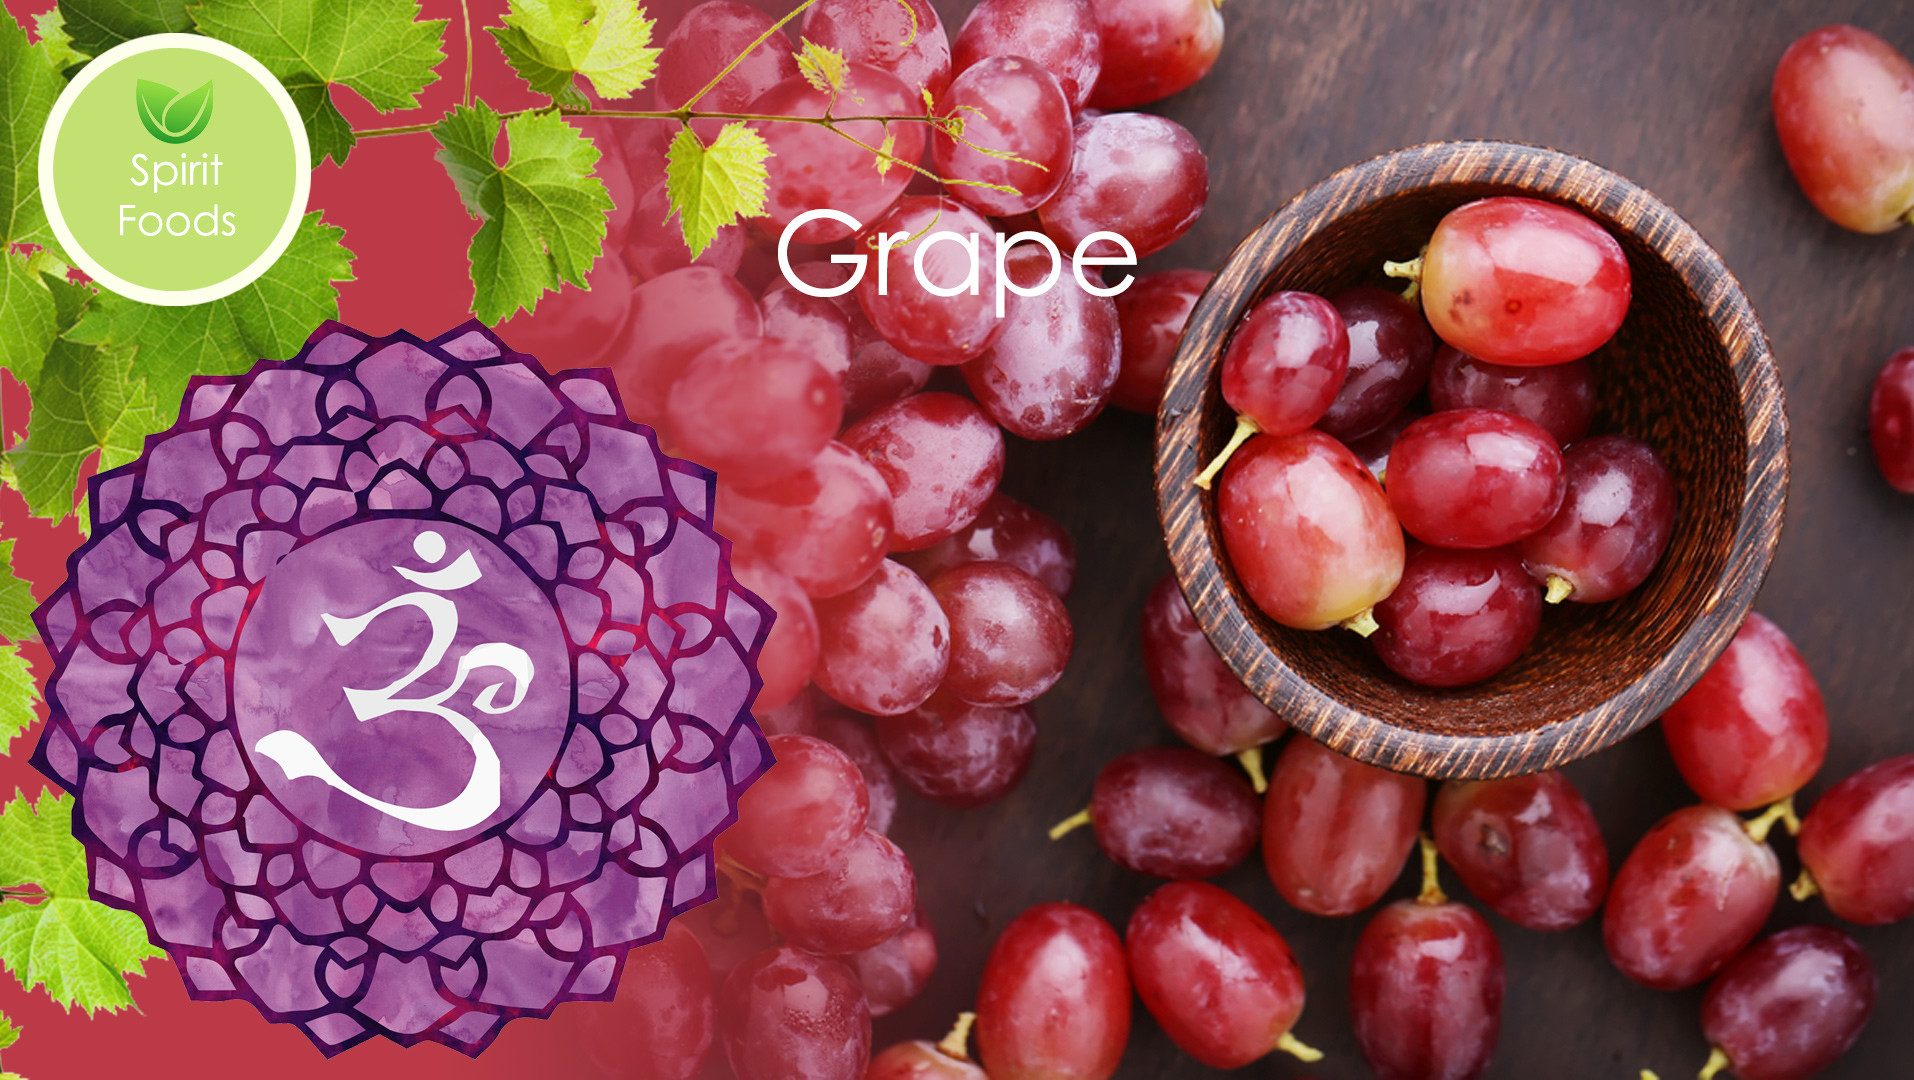 Spirit Food – Grape